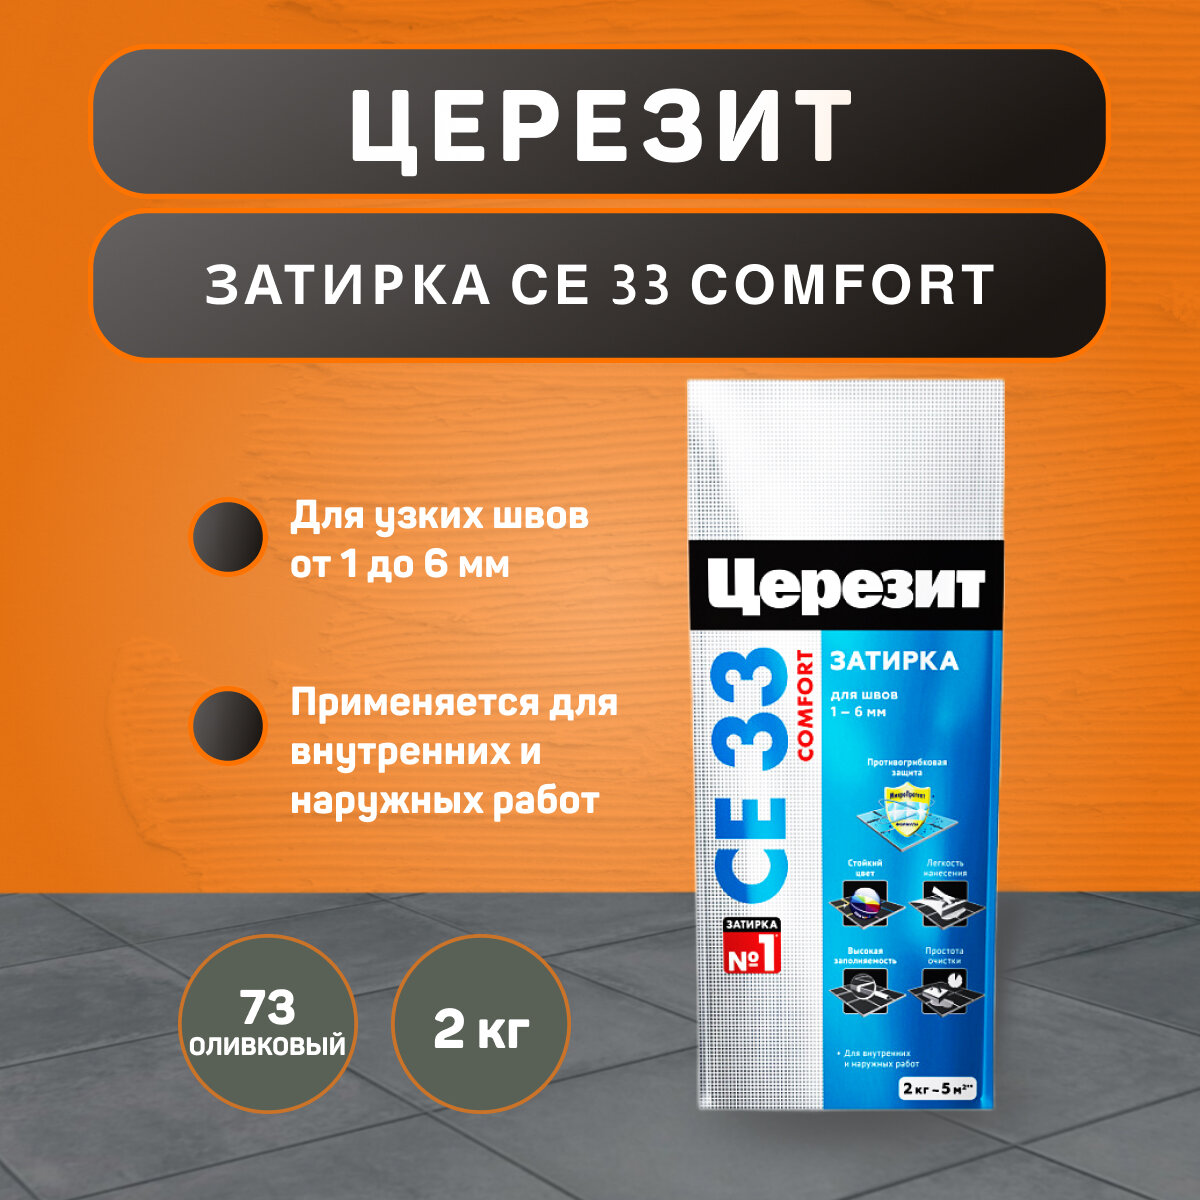 Затирка Ceresit CE 33 Comfort №73 оливковая 2 кг